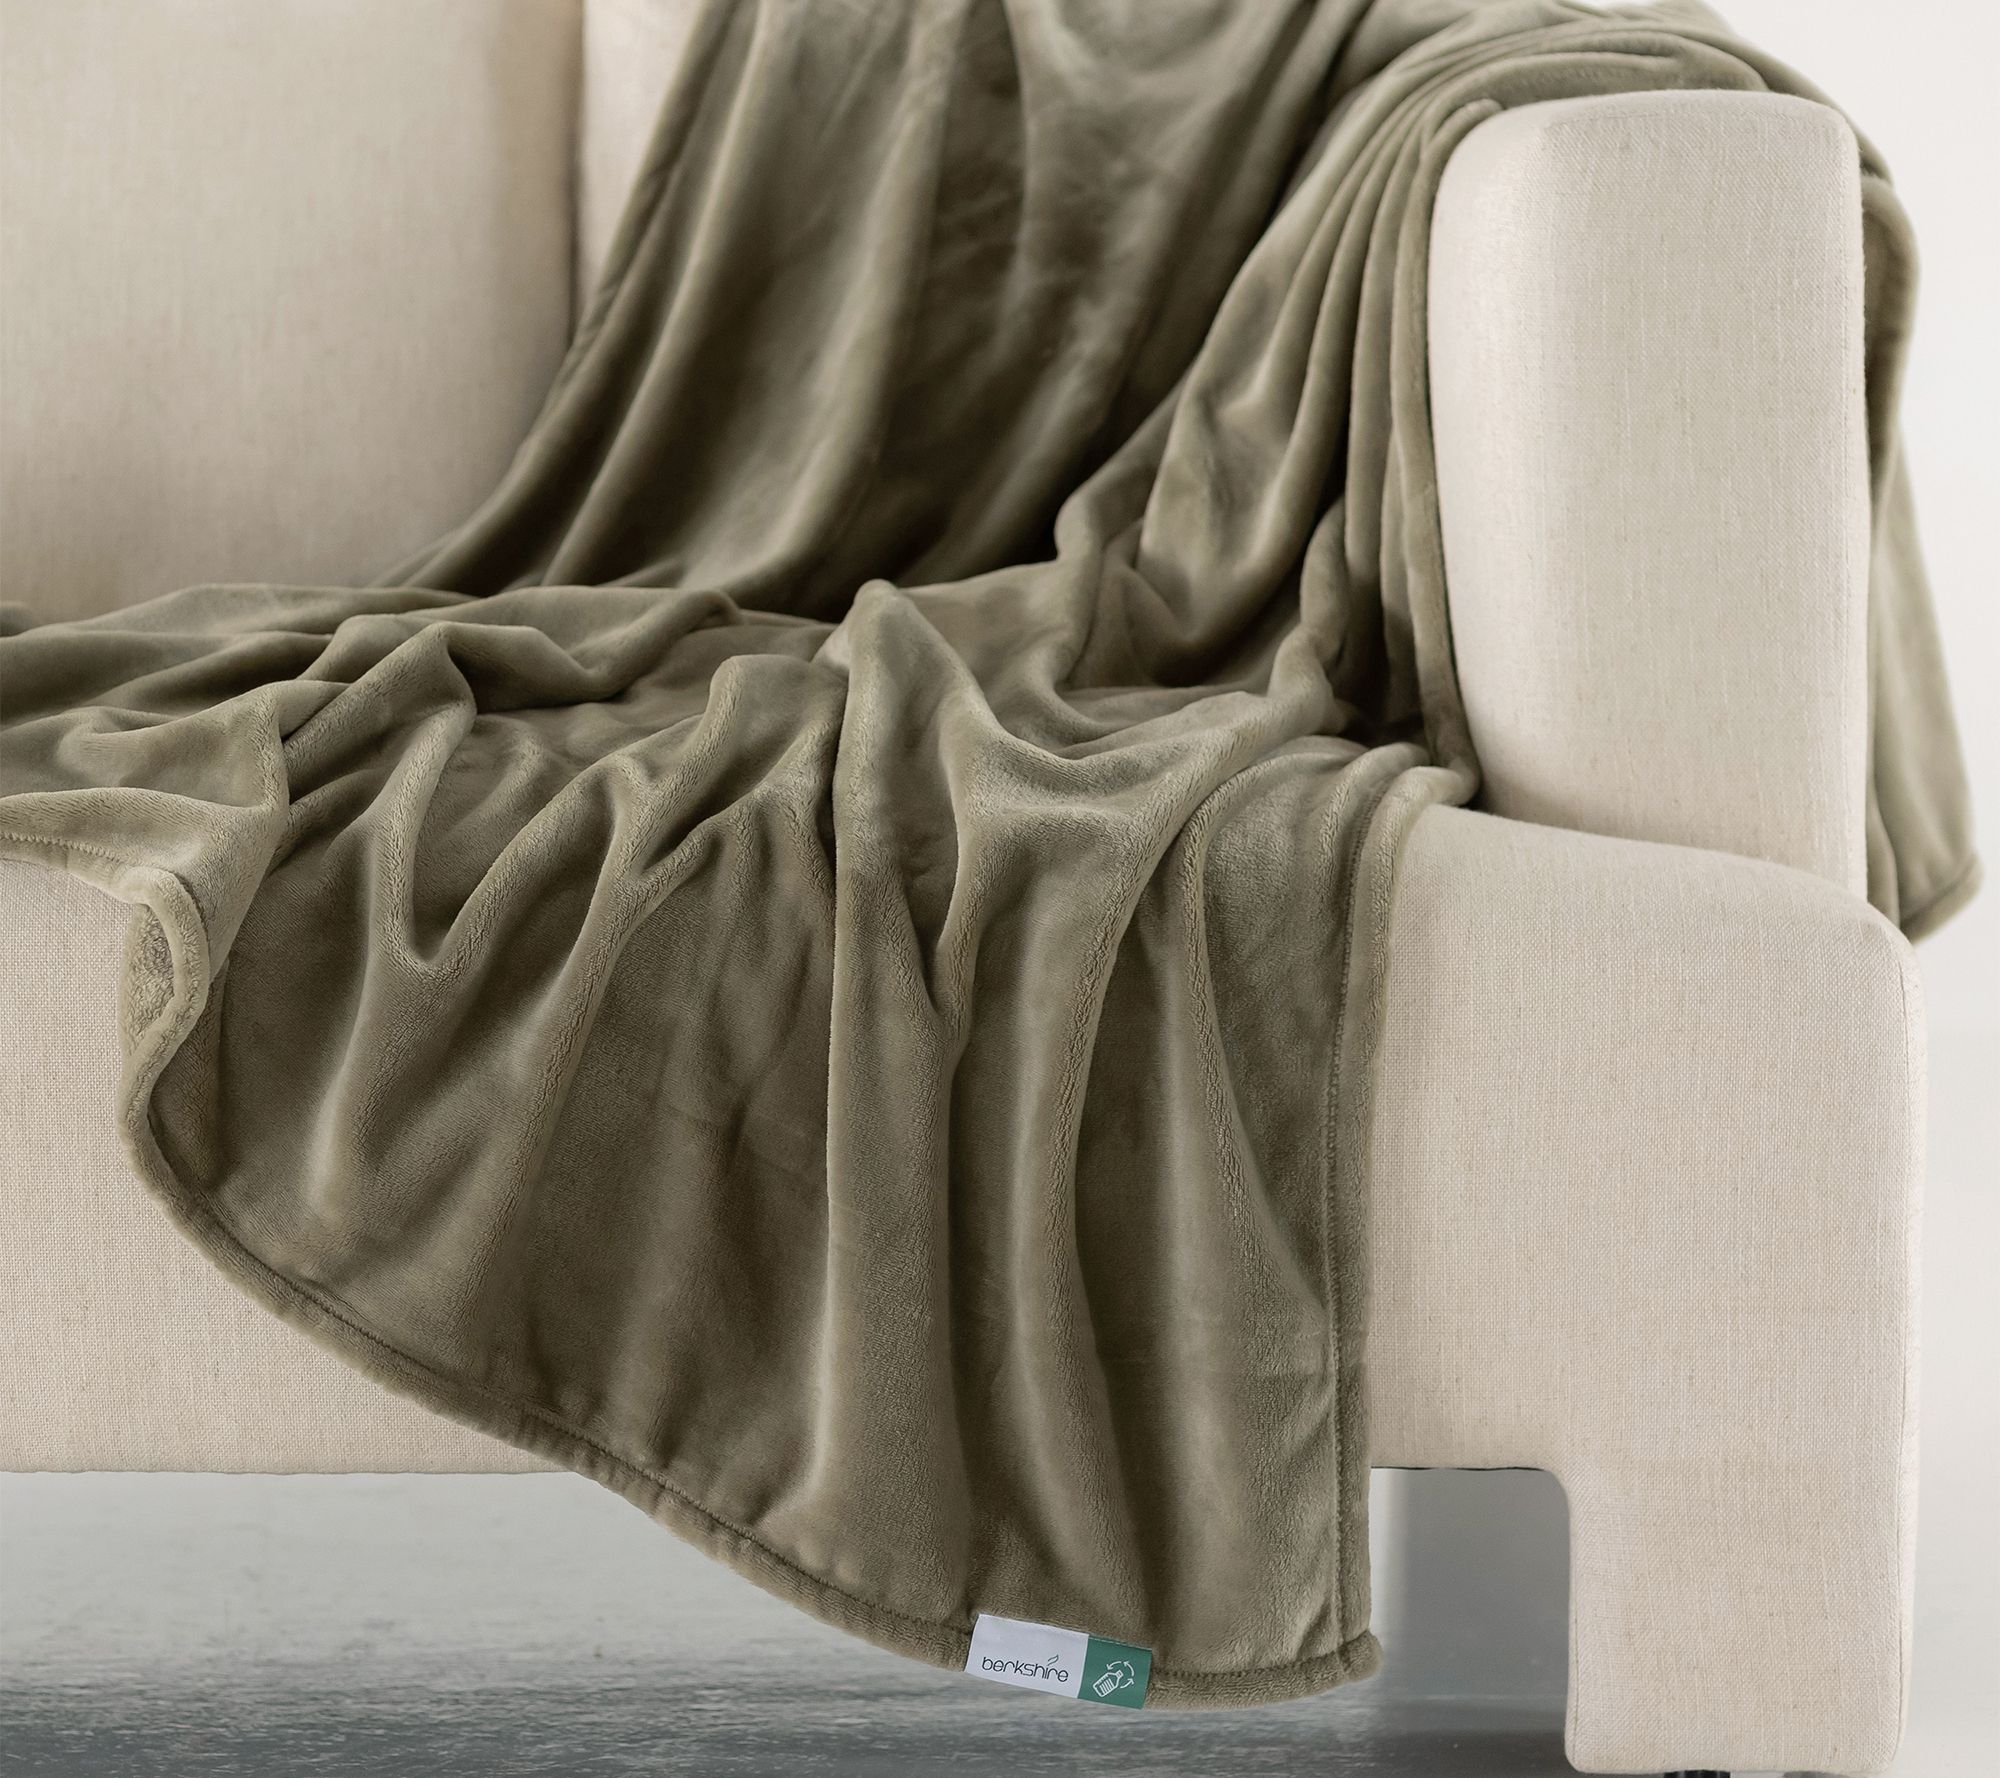 Berkshire Collection Faux Fur Plush Throw Blanket, 60x70, Choose Color